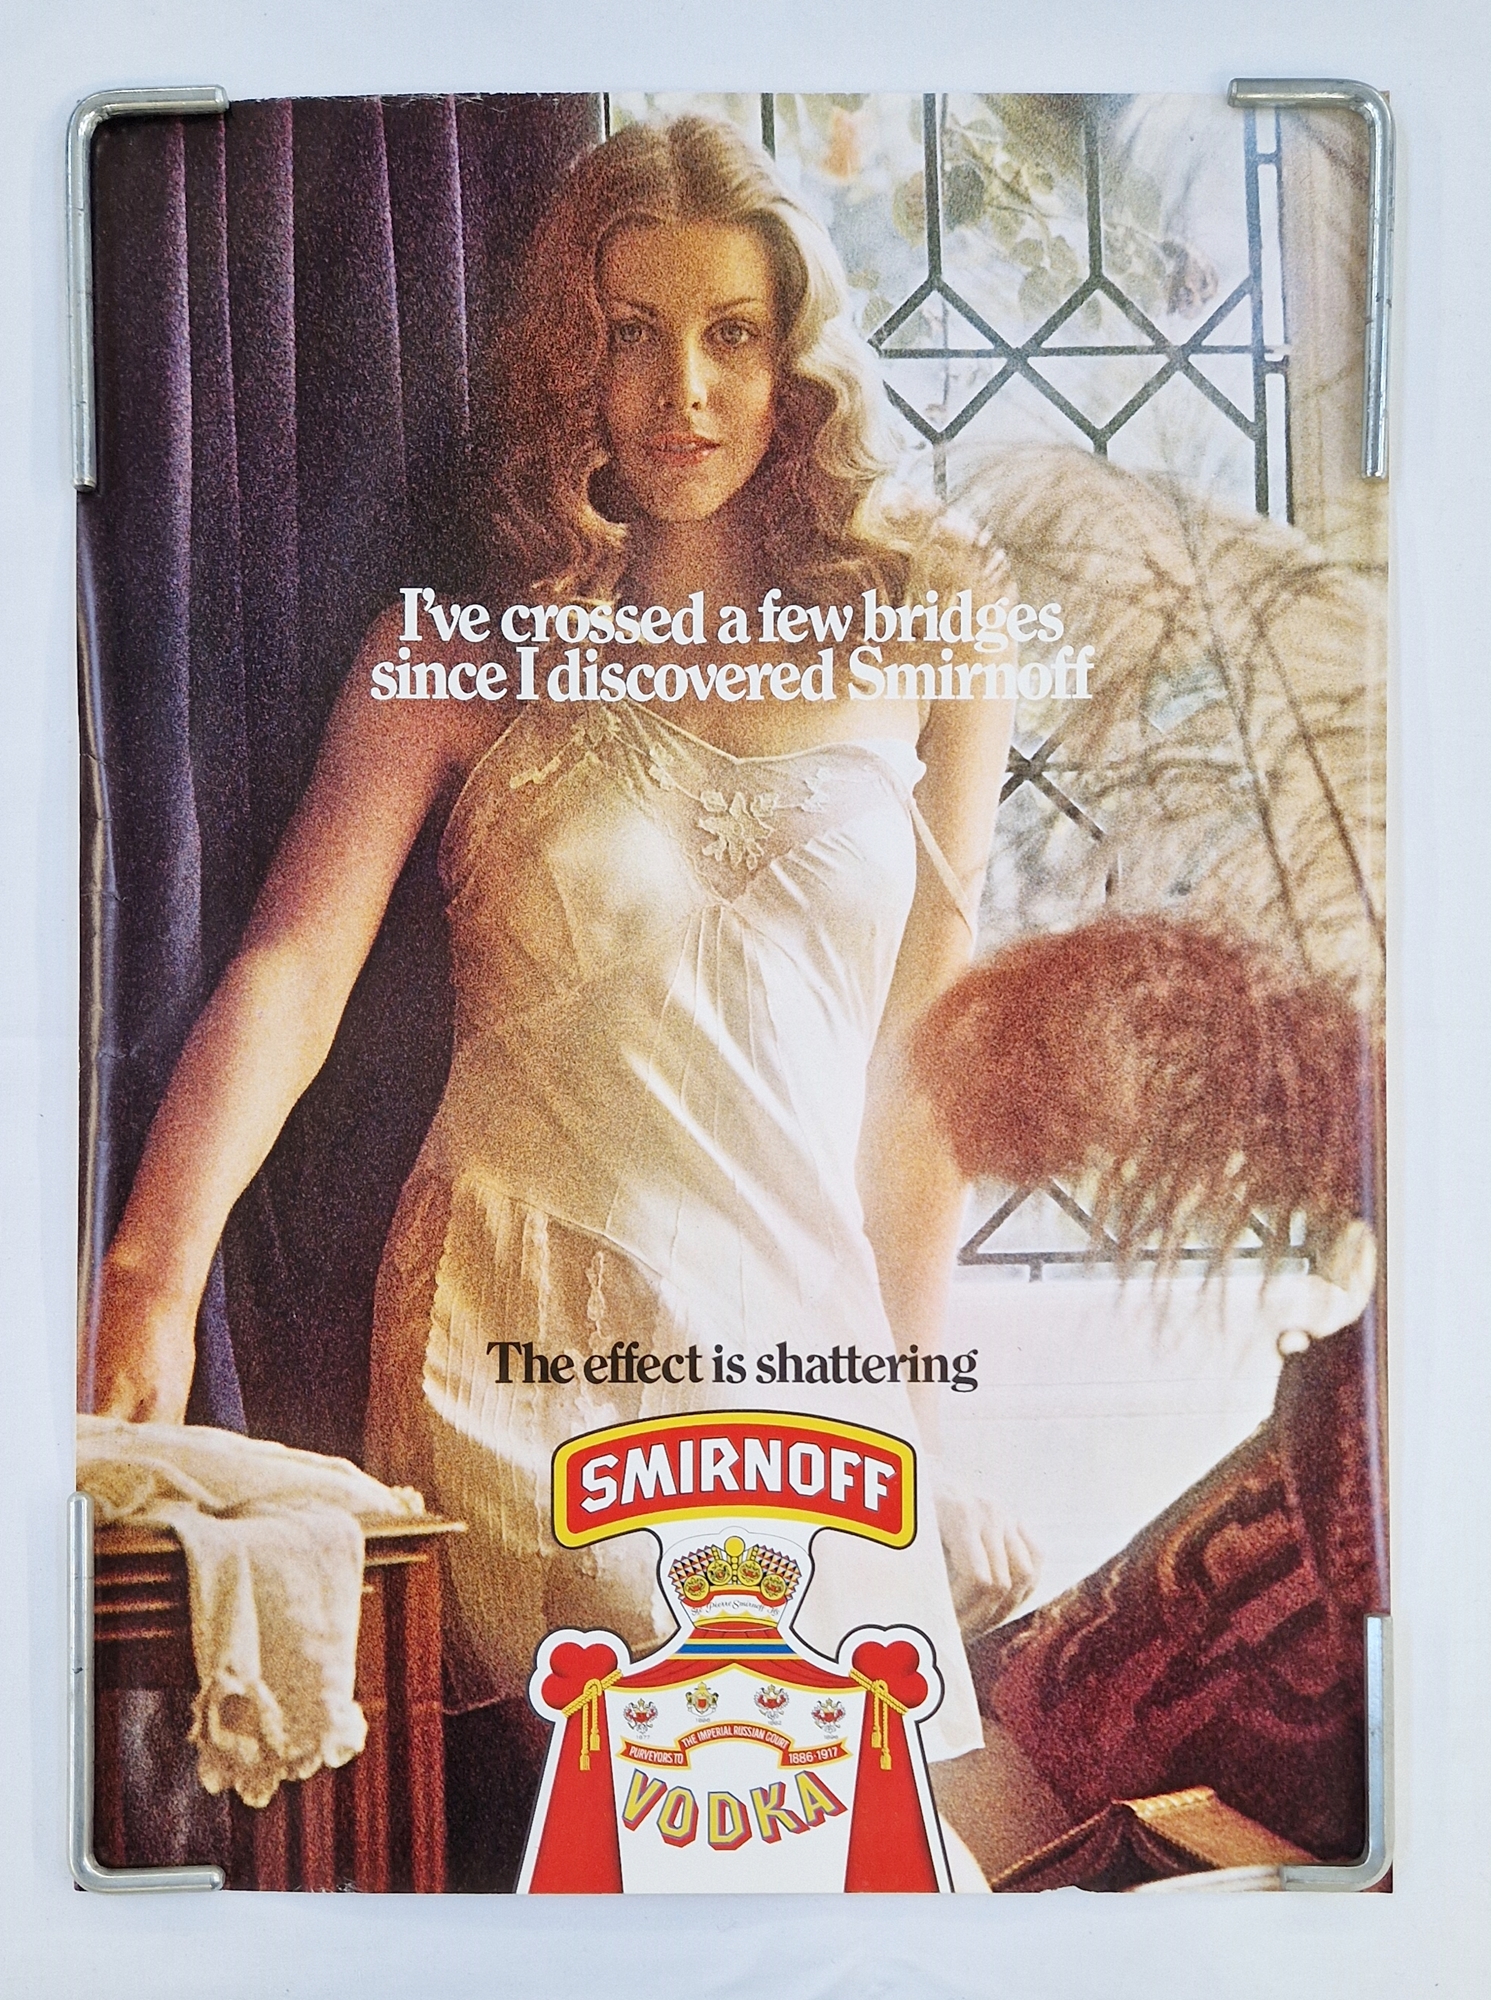 Two original vintage Smirnoff vodka advertising posters: "I've crossed a few bridges since I